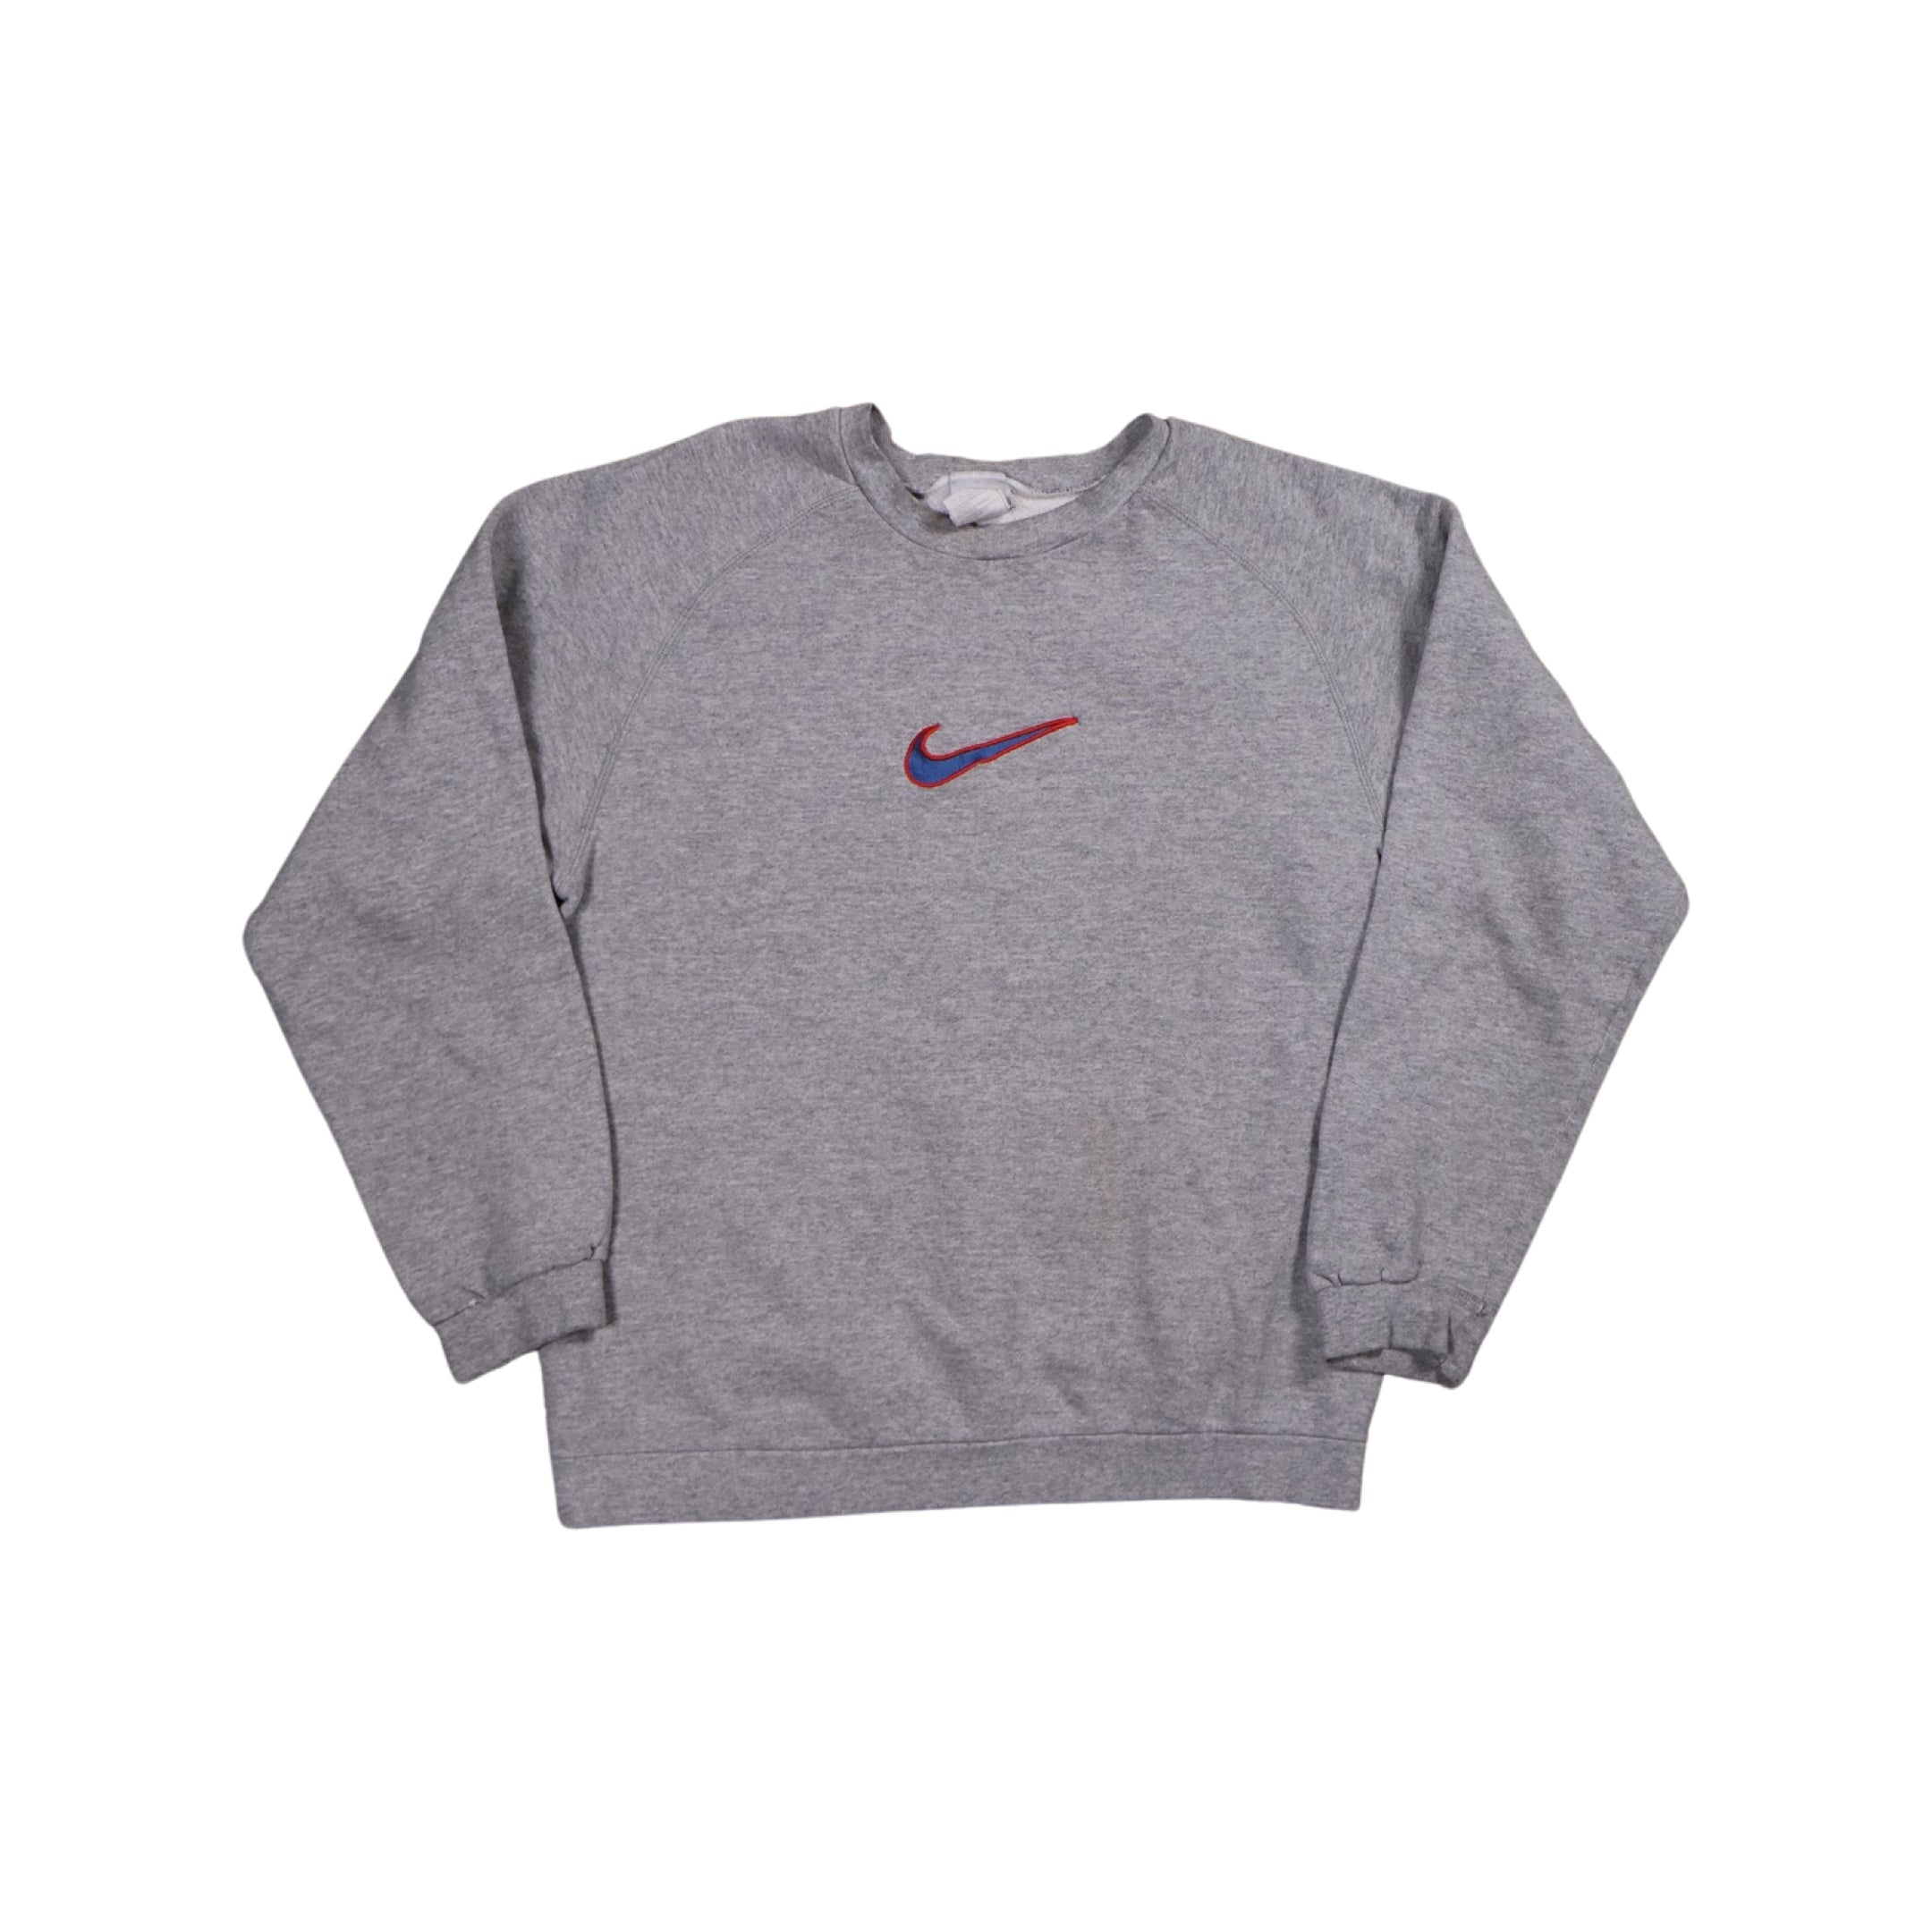 Gray Nike 90s Sweater (Small)